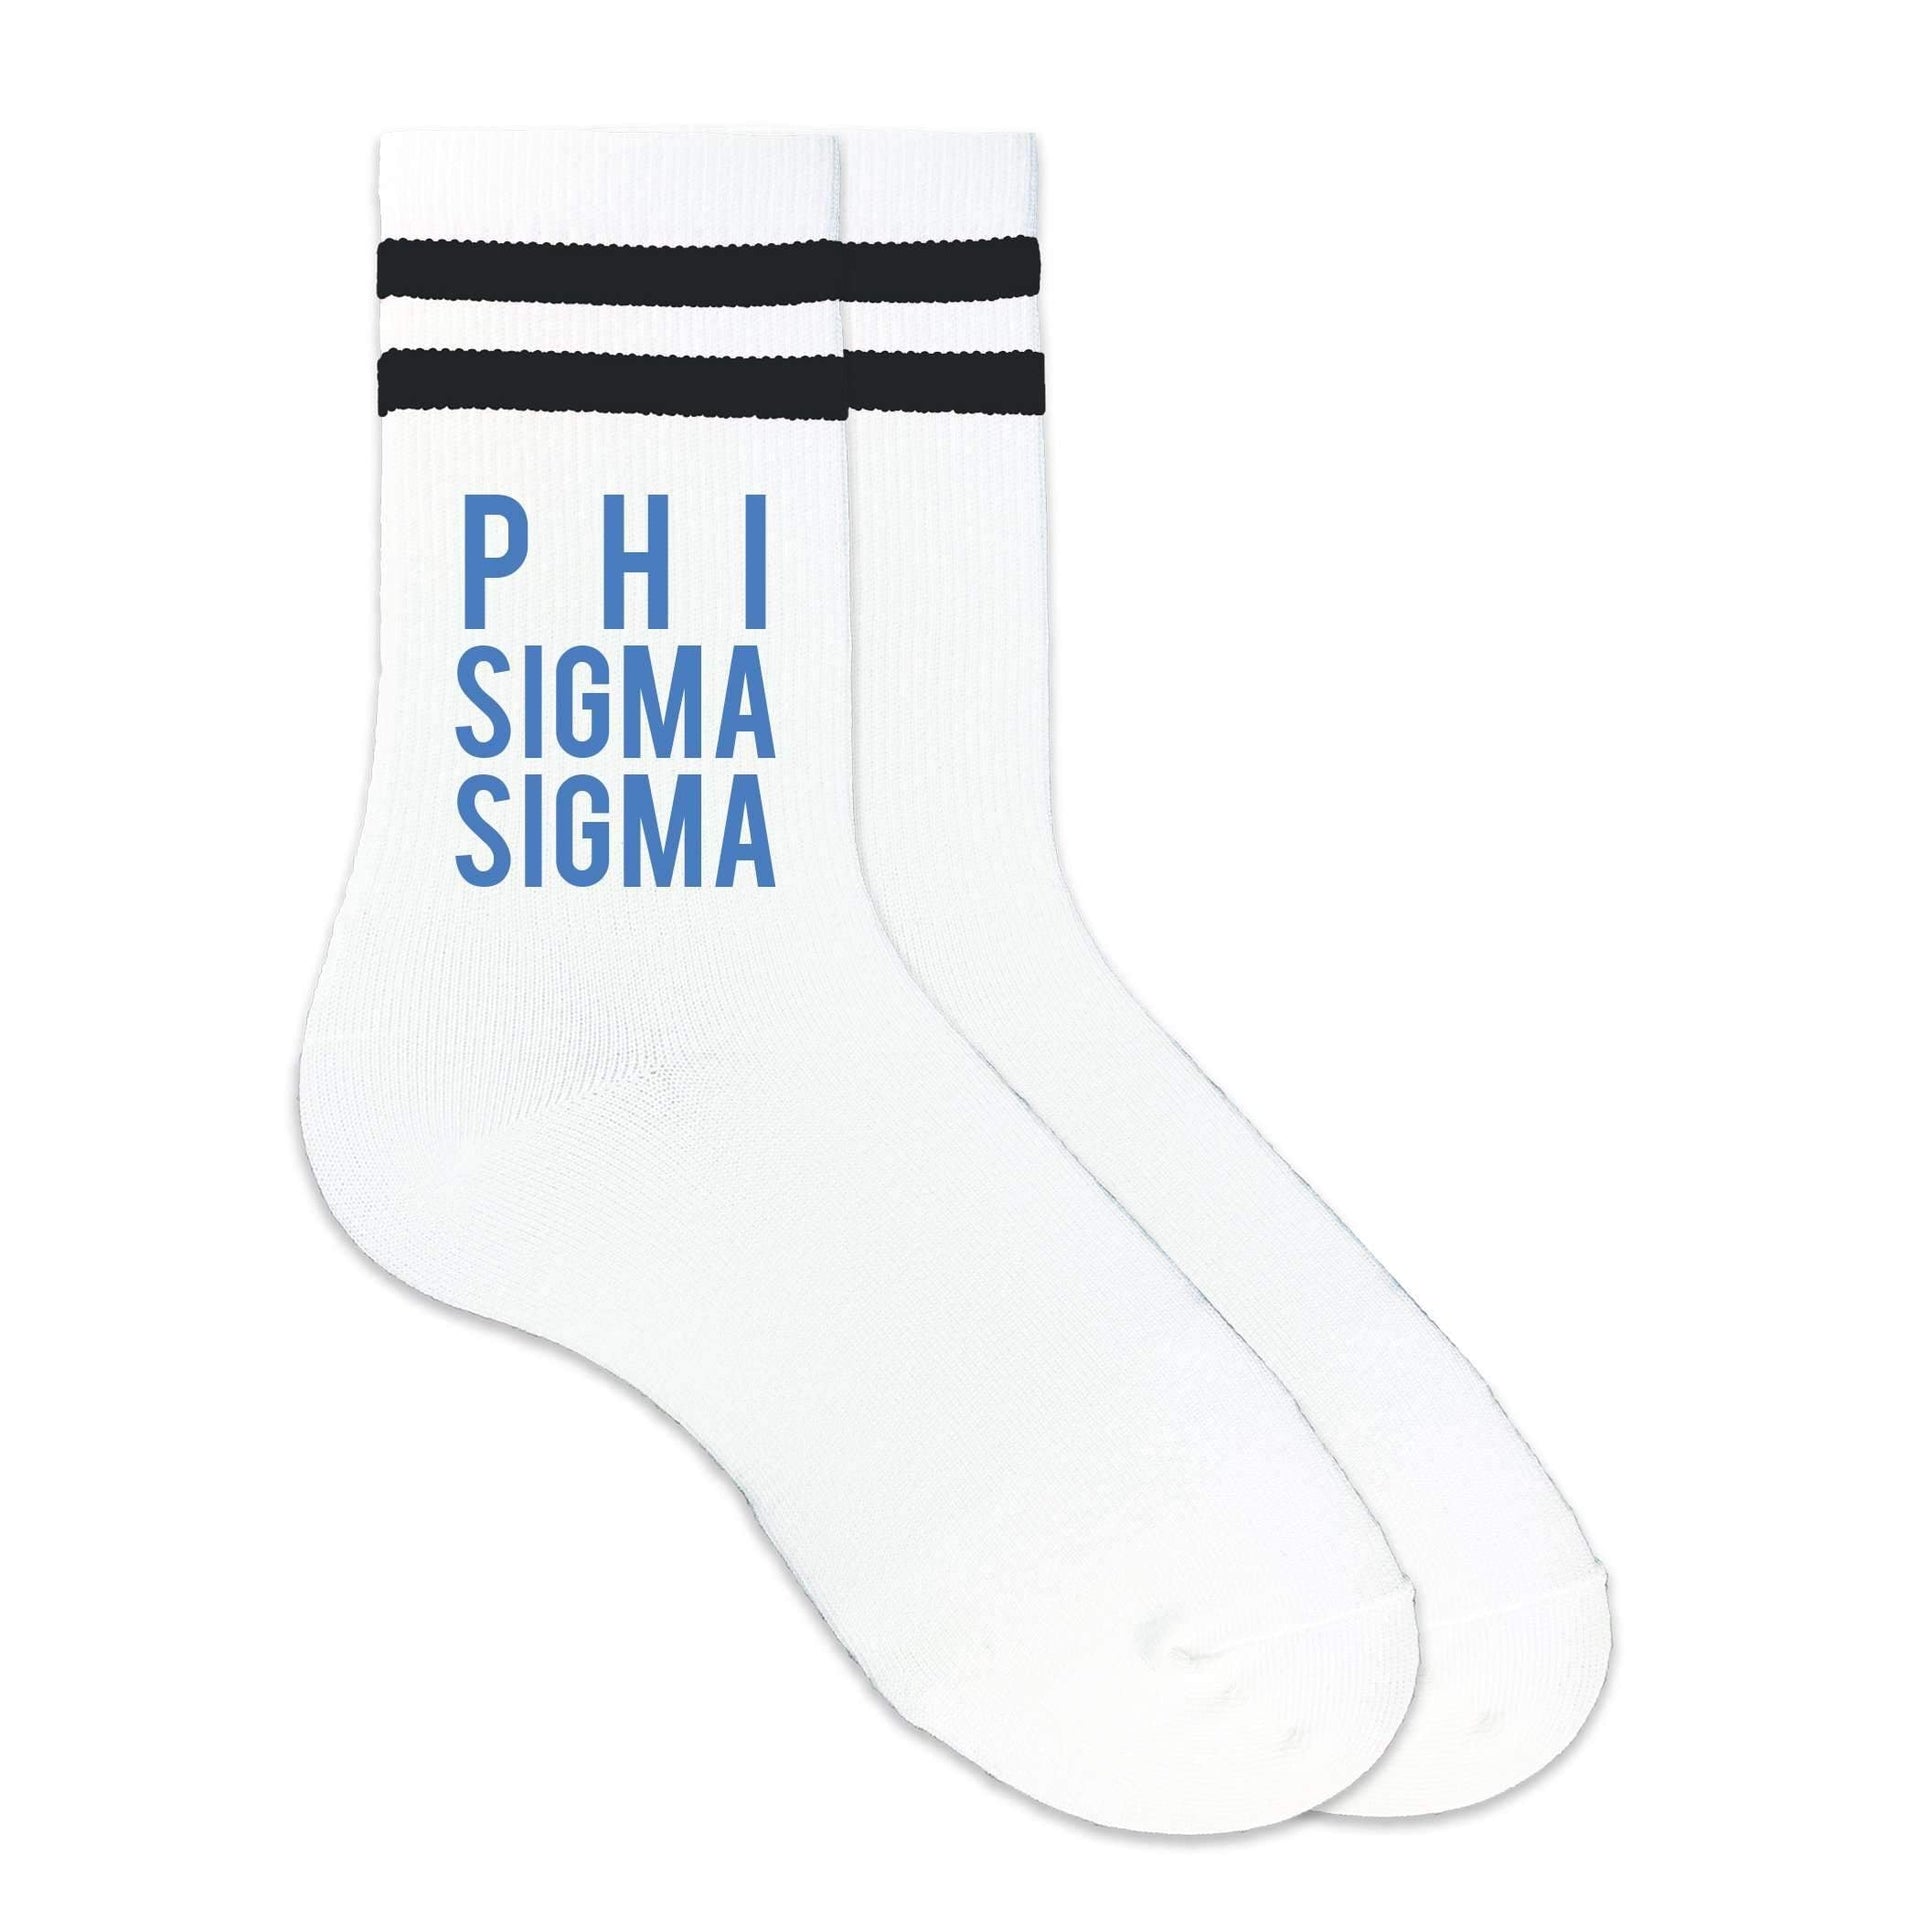 Phi Sigma Sigma sorority name custom printed on black striped crew socks